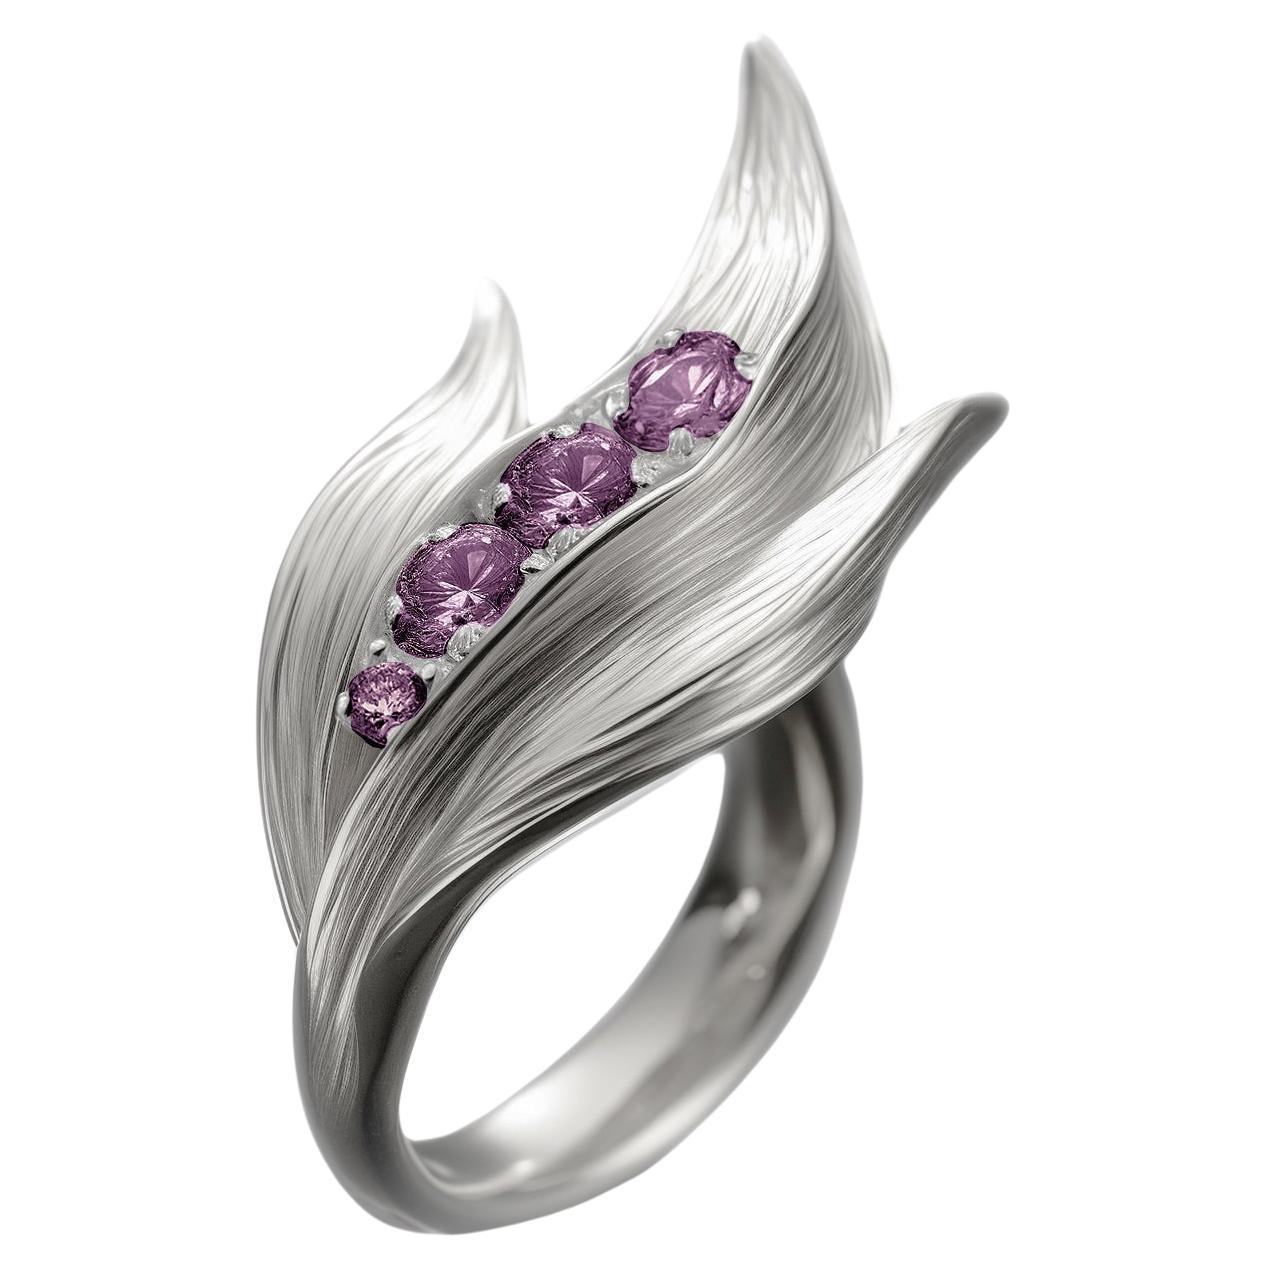 The Contemporary Lily of The Valley Ring with Purple Sapphires (bague muguet contemporaine en or blanc avec saphirs violets) en vente